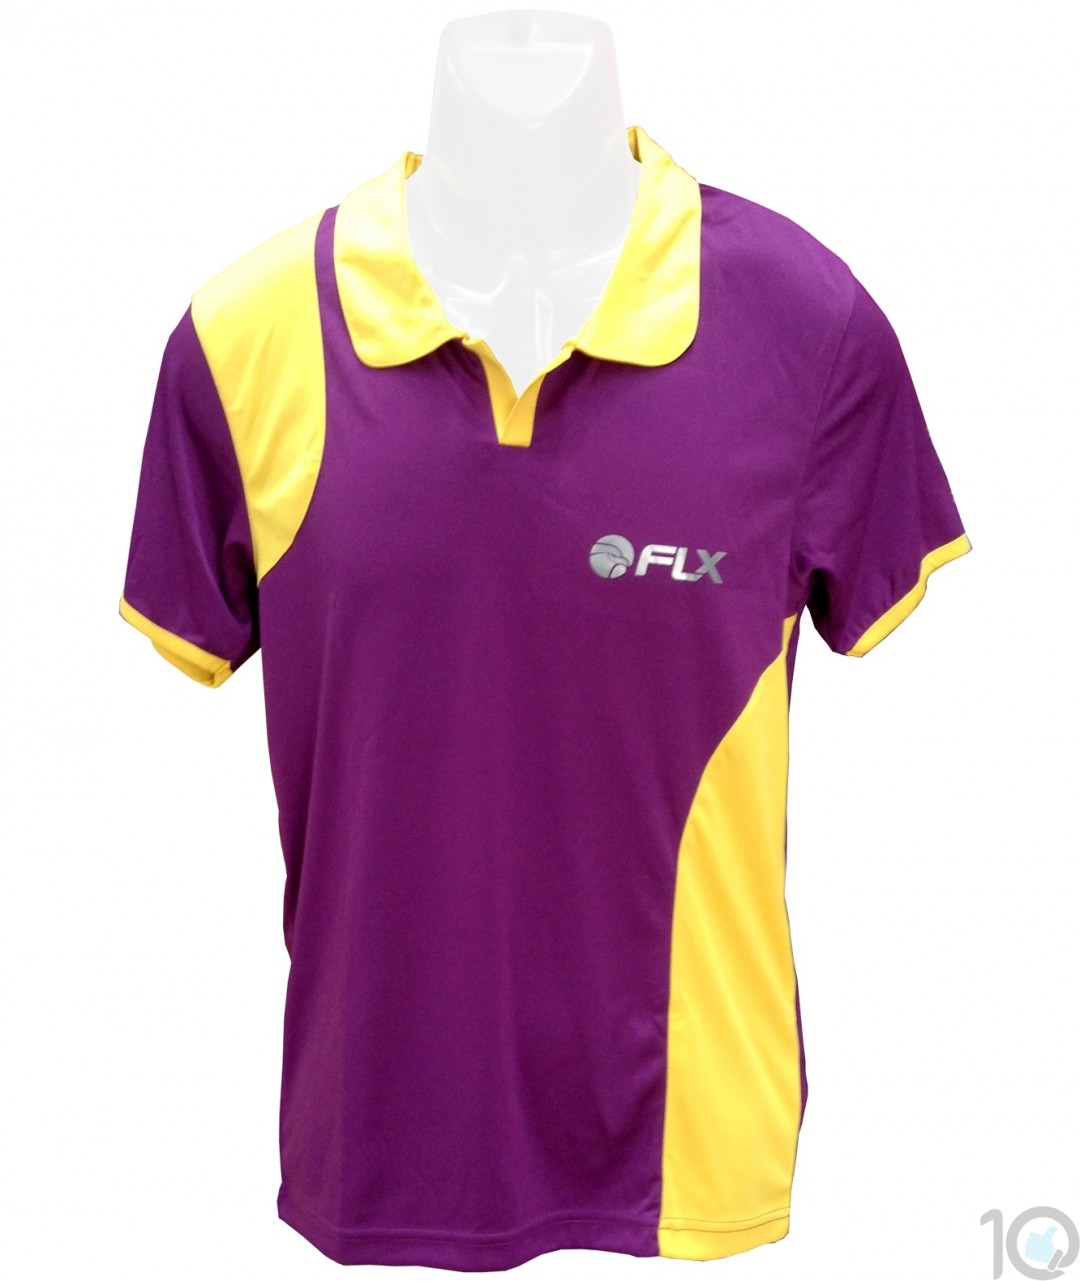 jersey online shop india